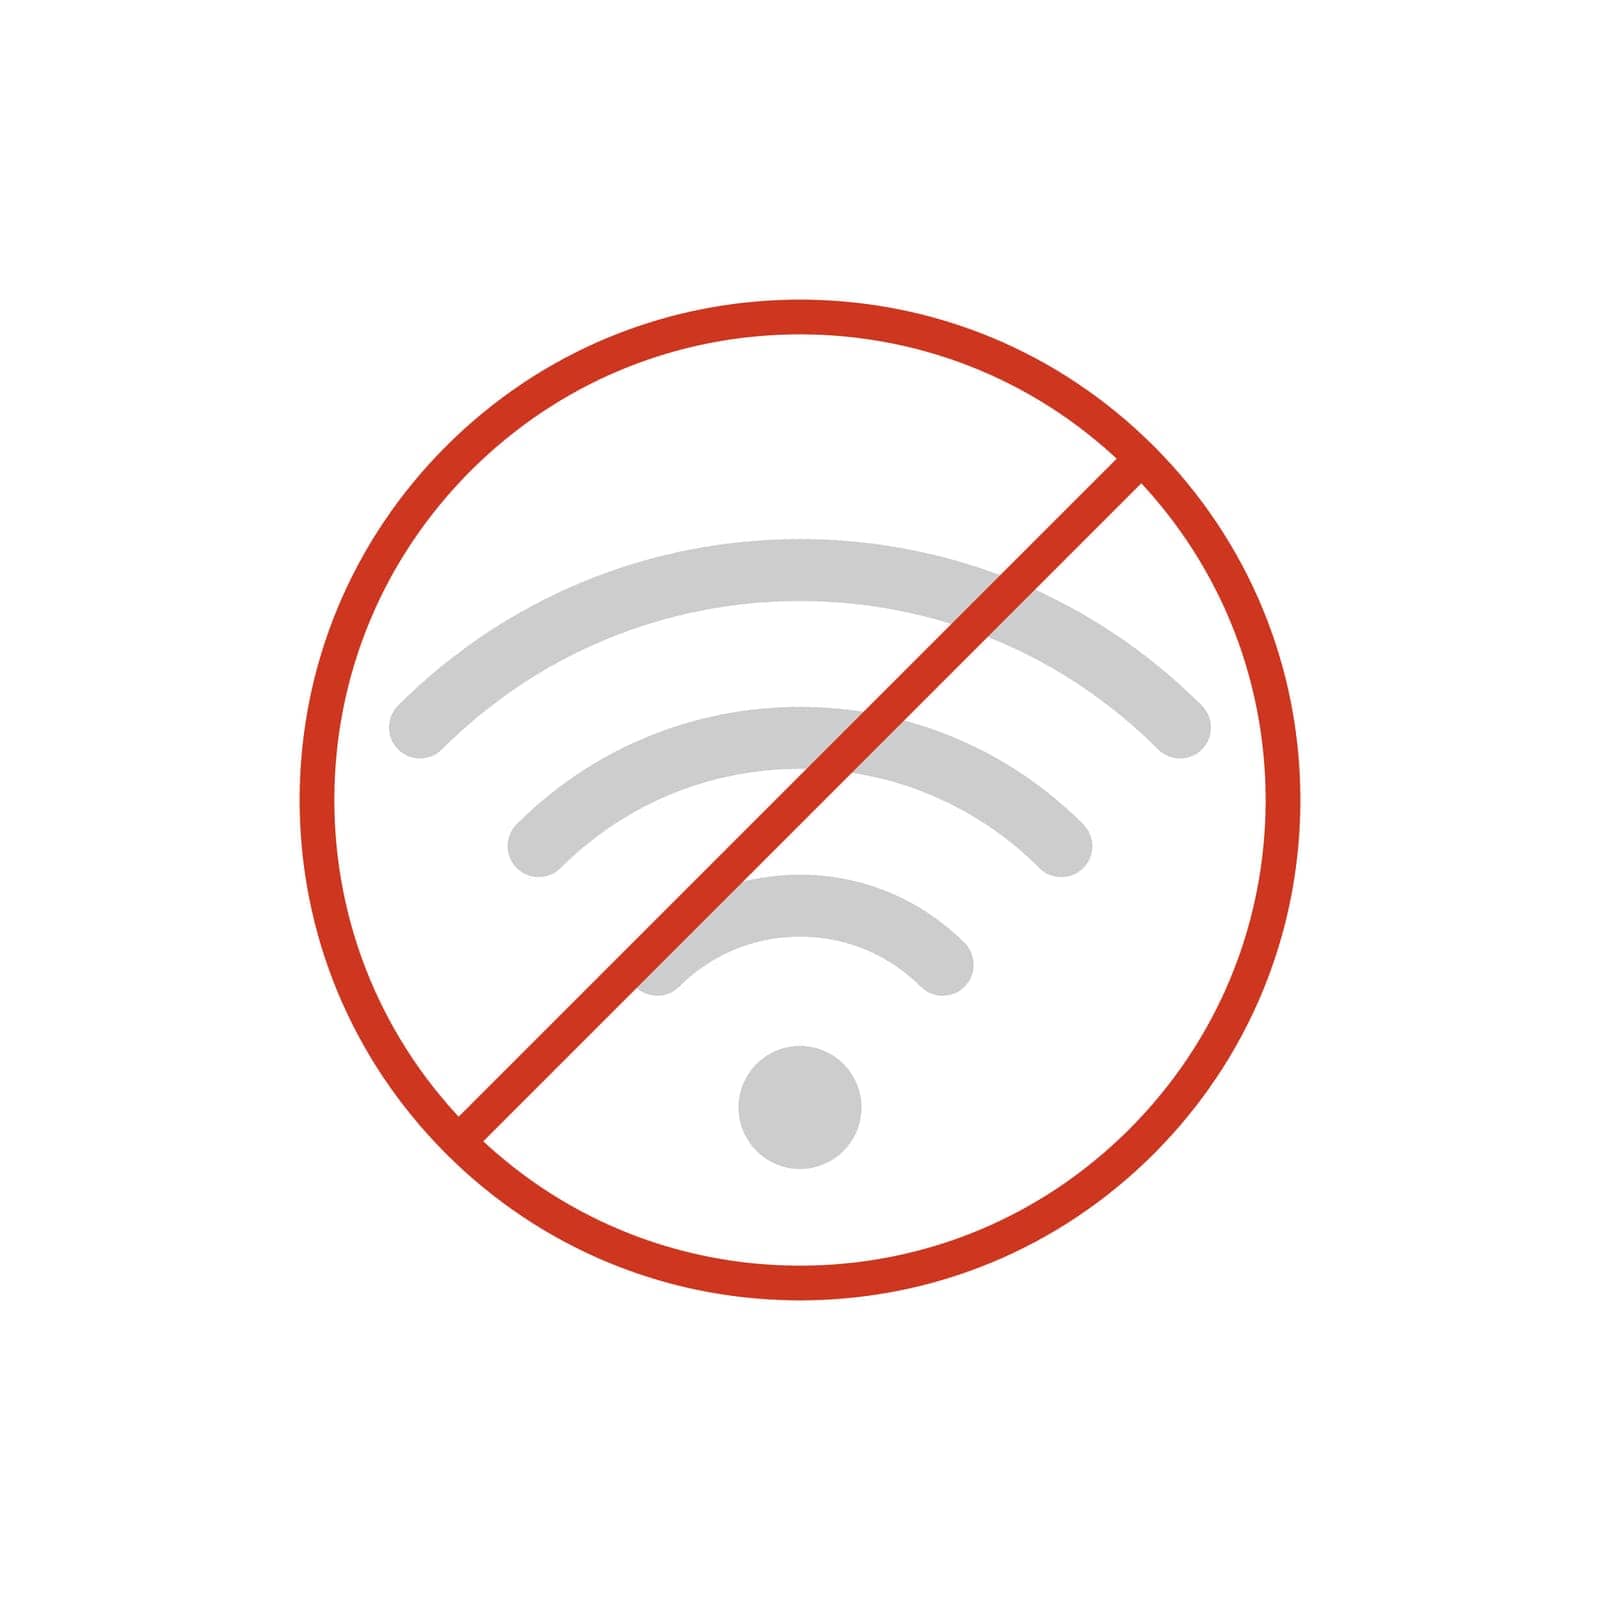 Internet connection error, no or bad signal pictogram vector illustration